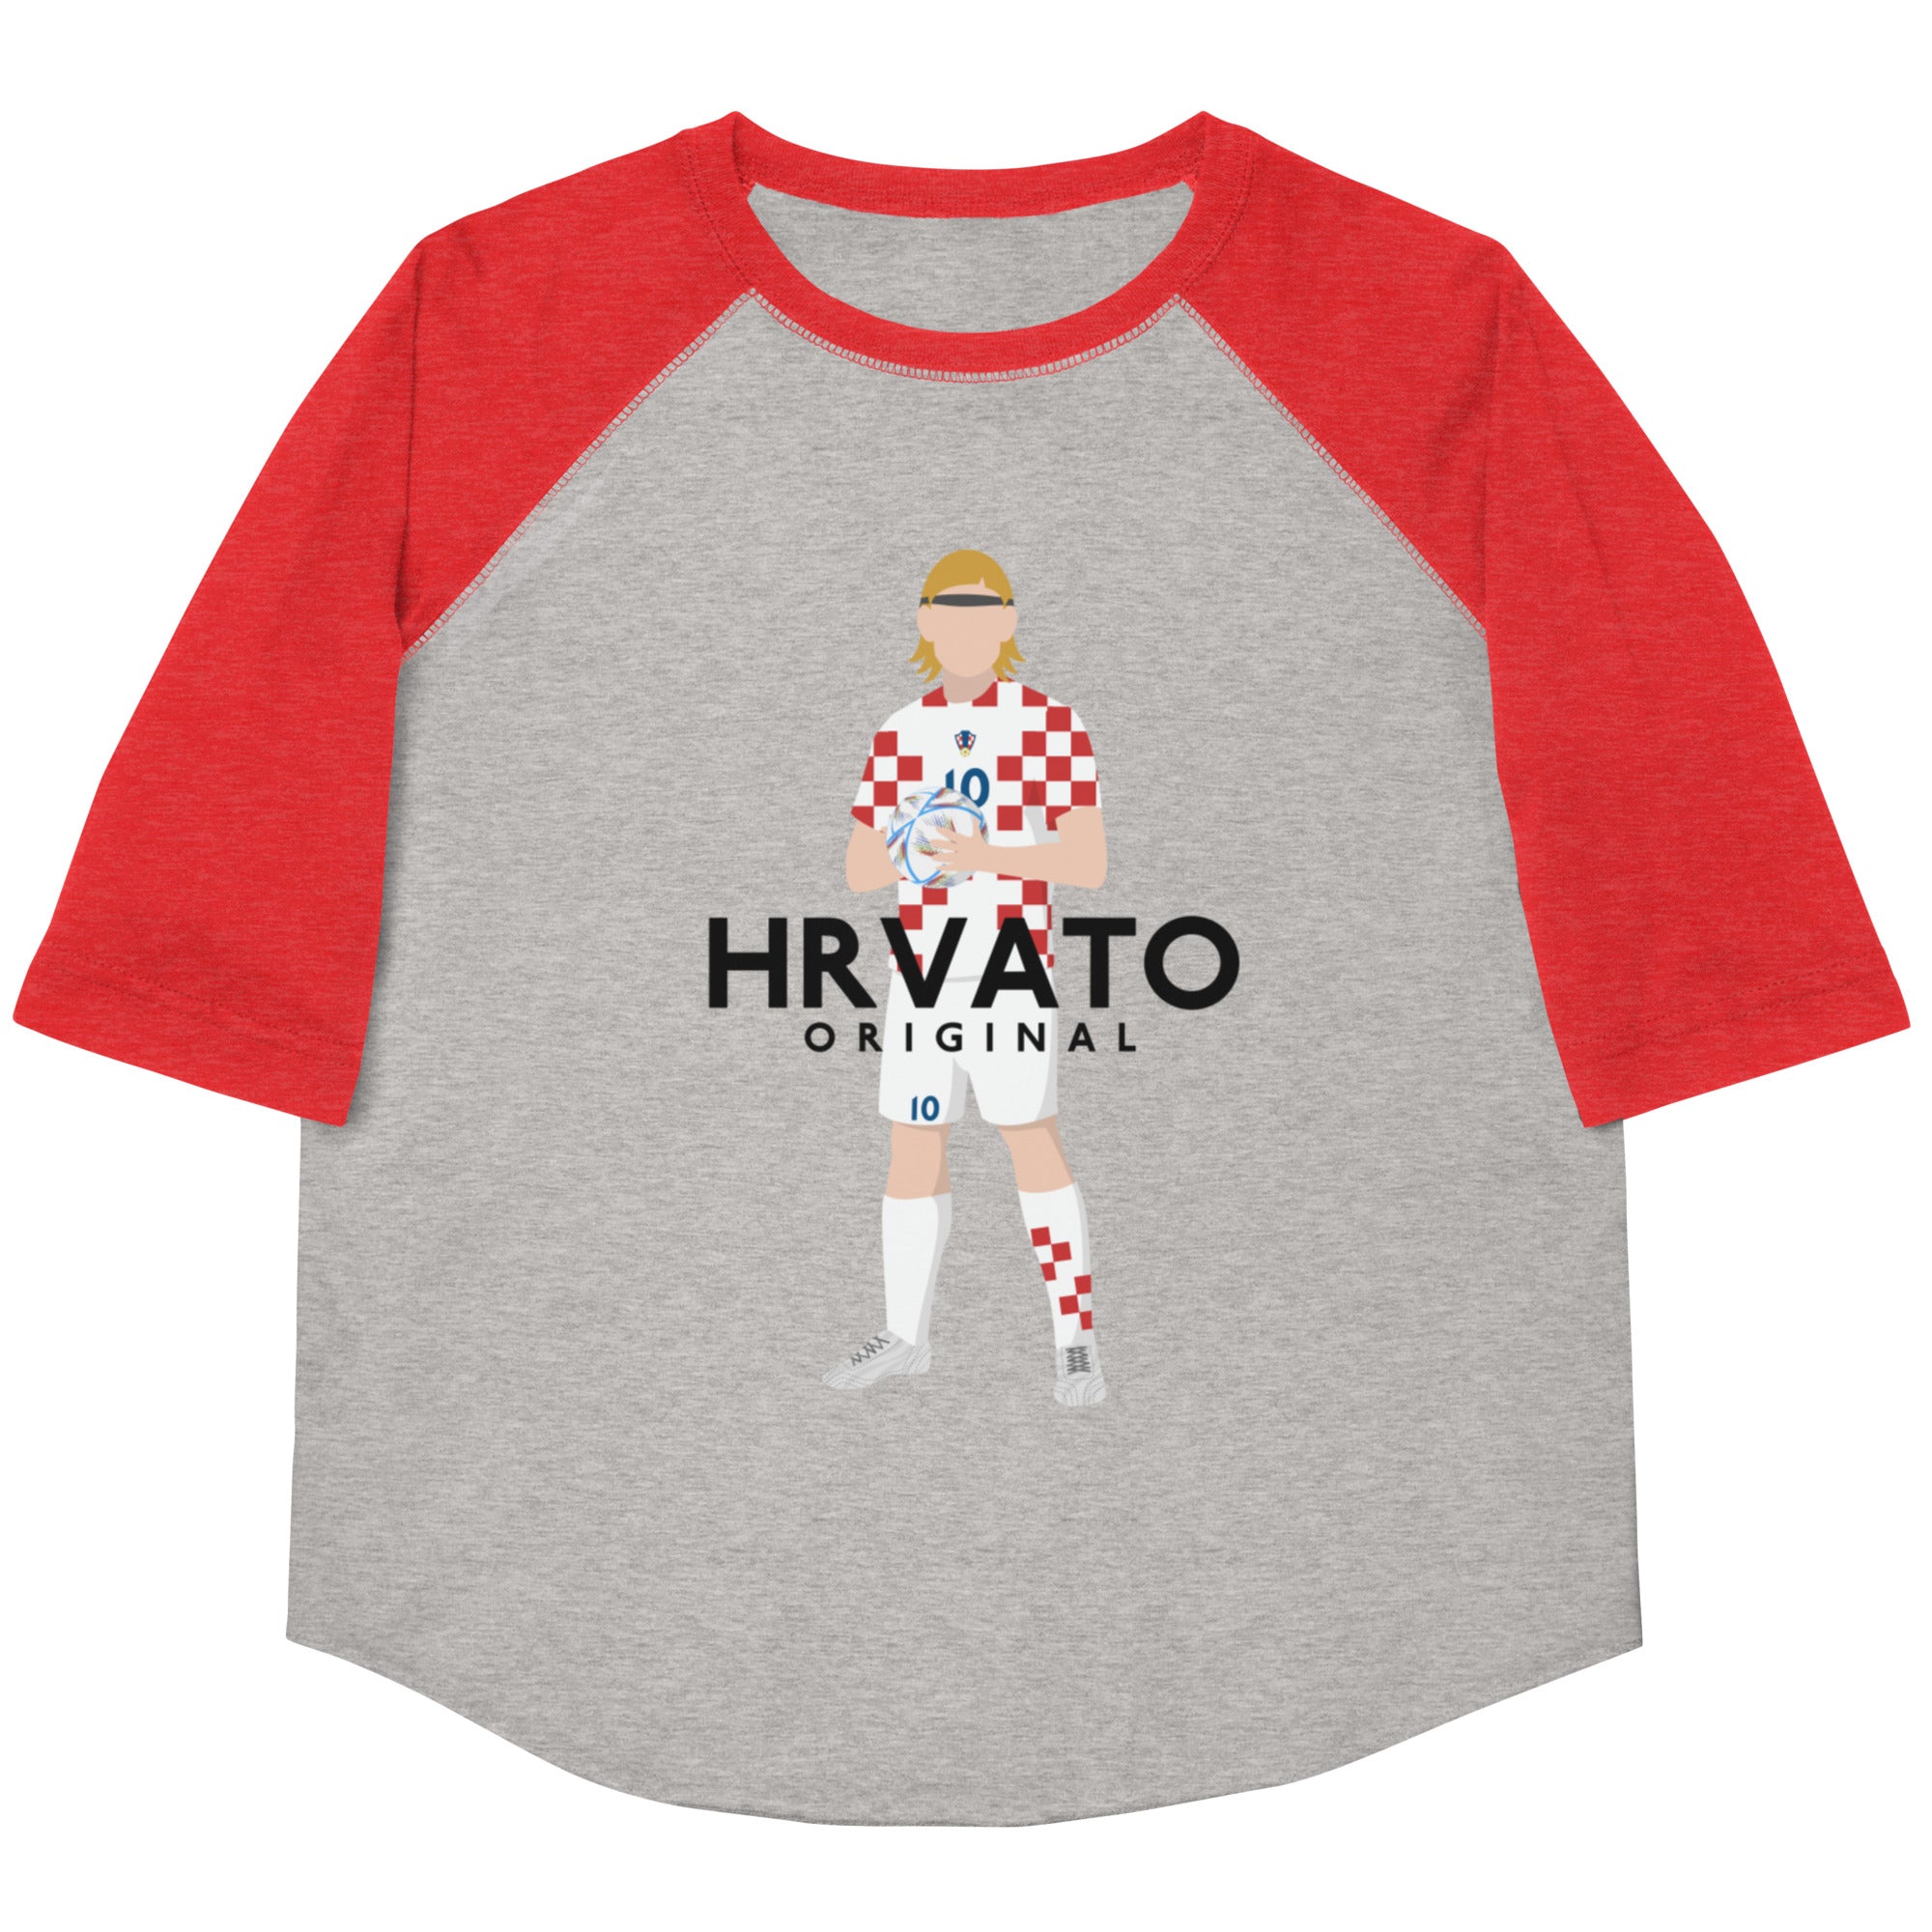 Boys Youth baseball shirt – HRVATO